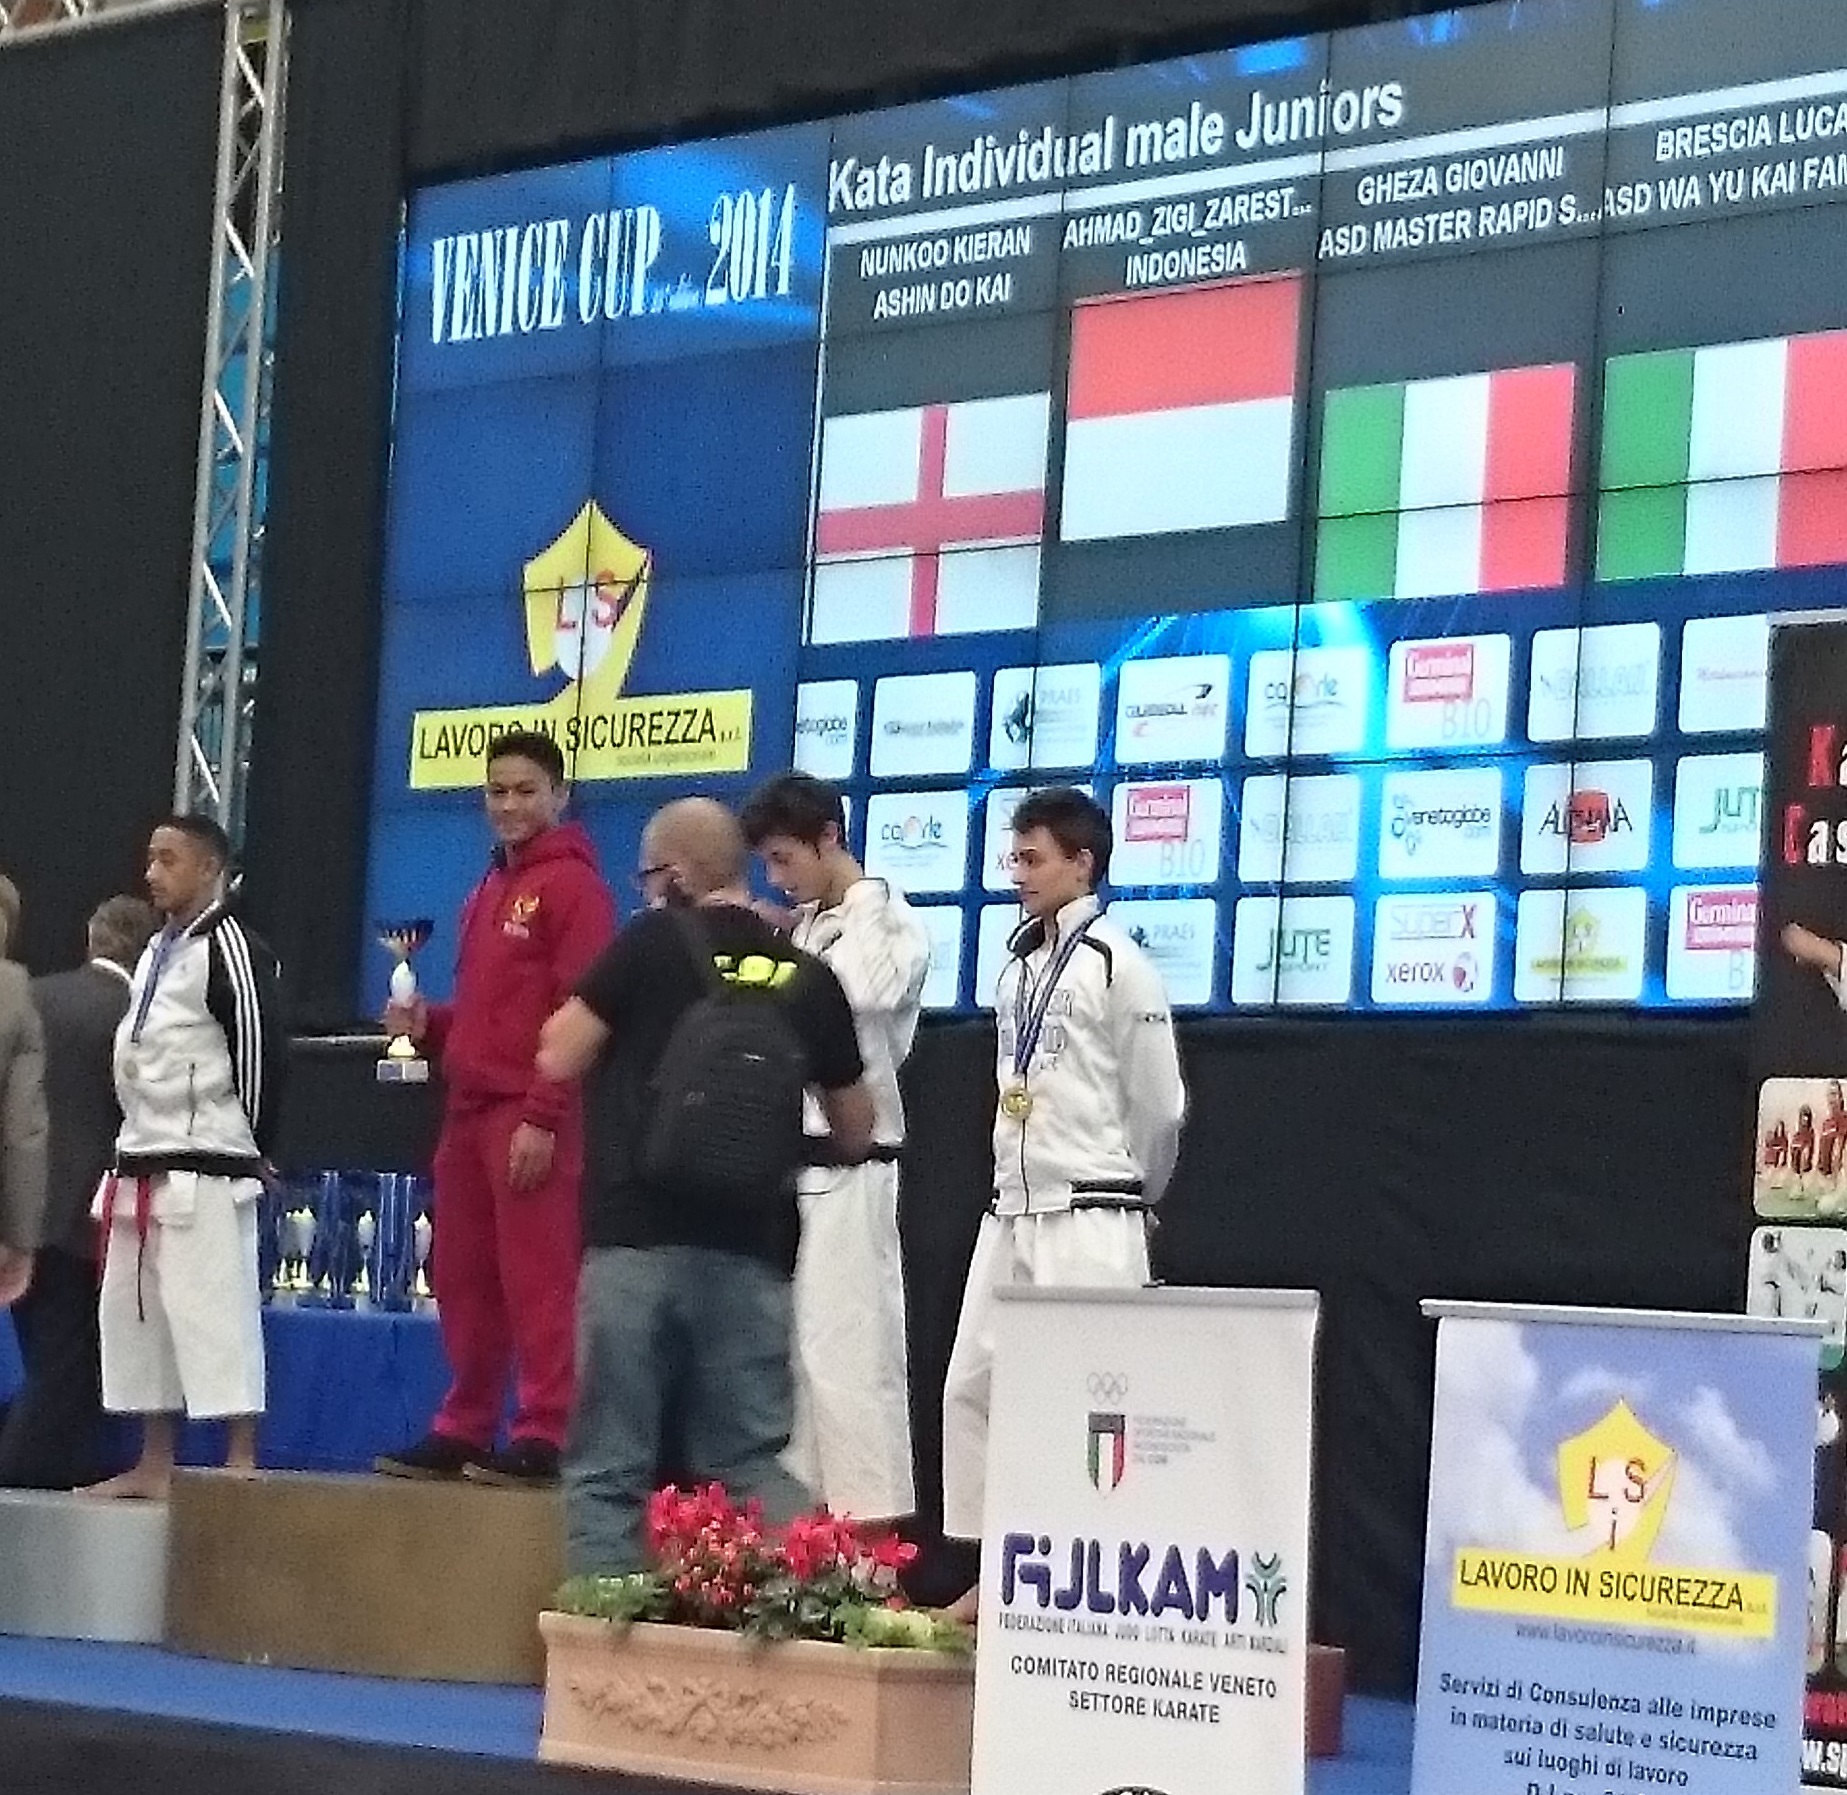 Il Karate Master Rapid SKF vince 15 medaglie alla Venice Cup 2014